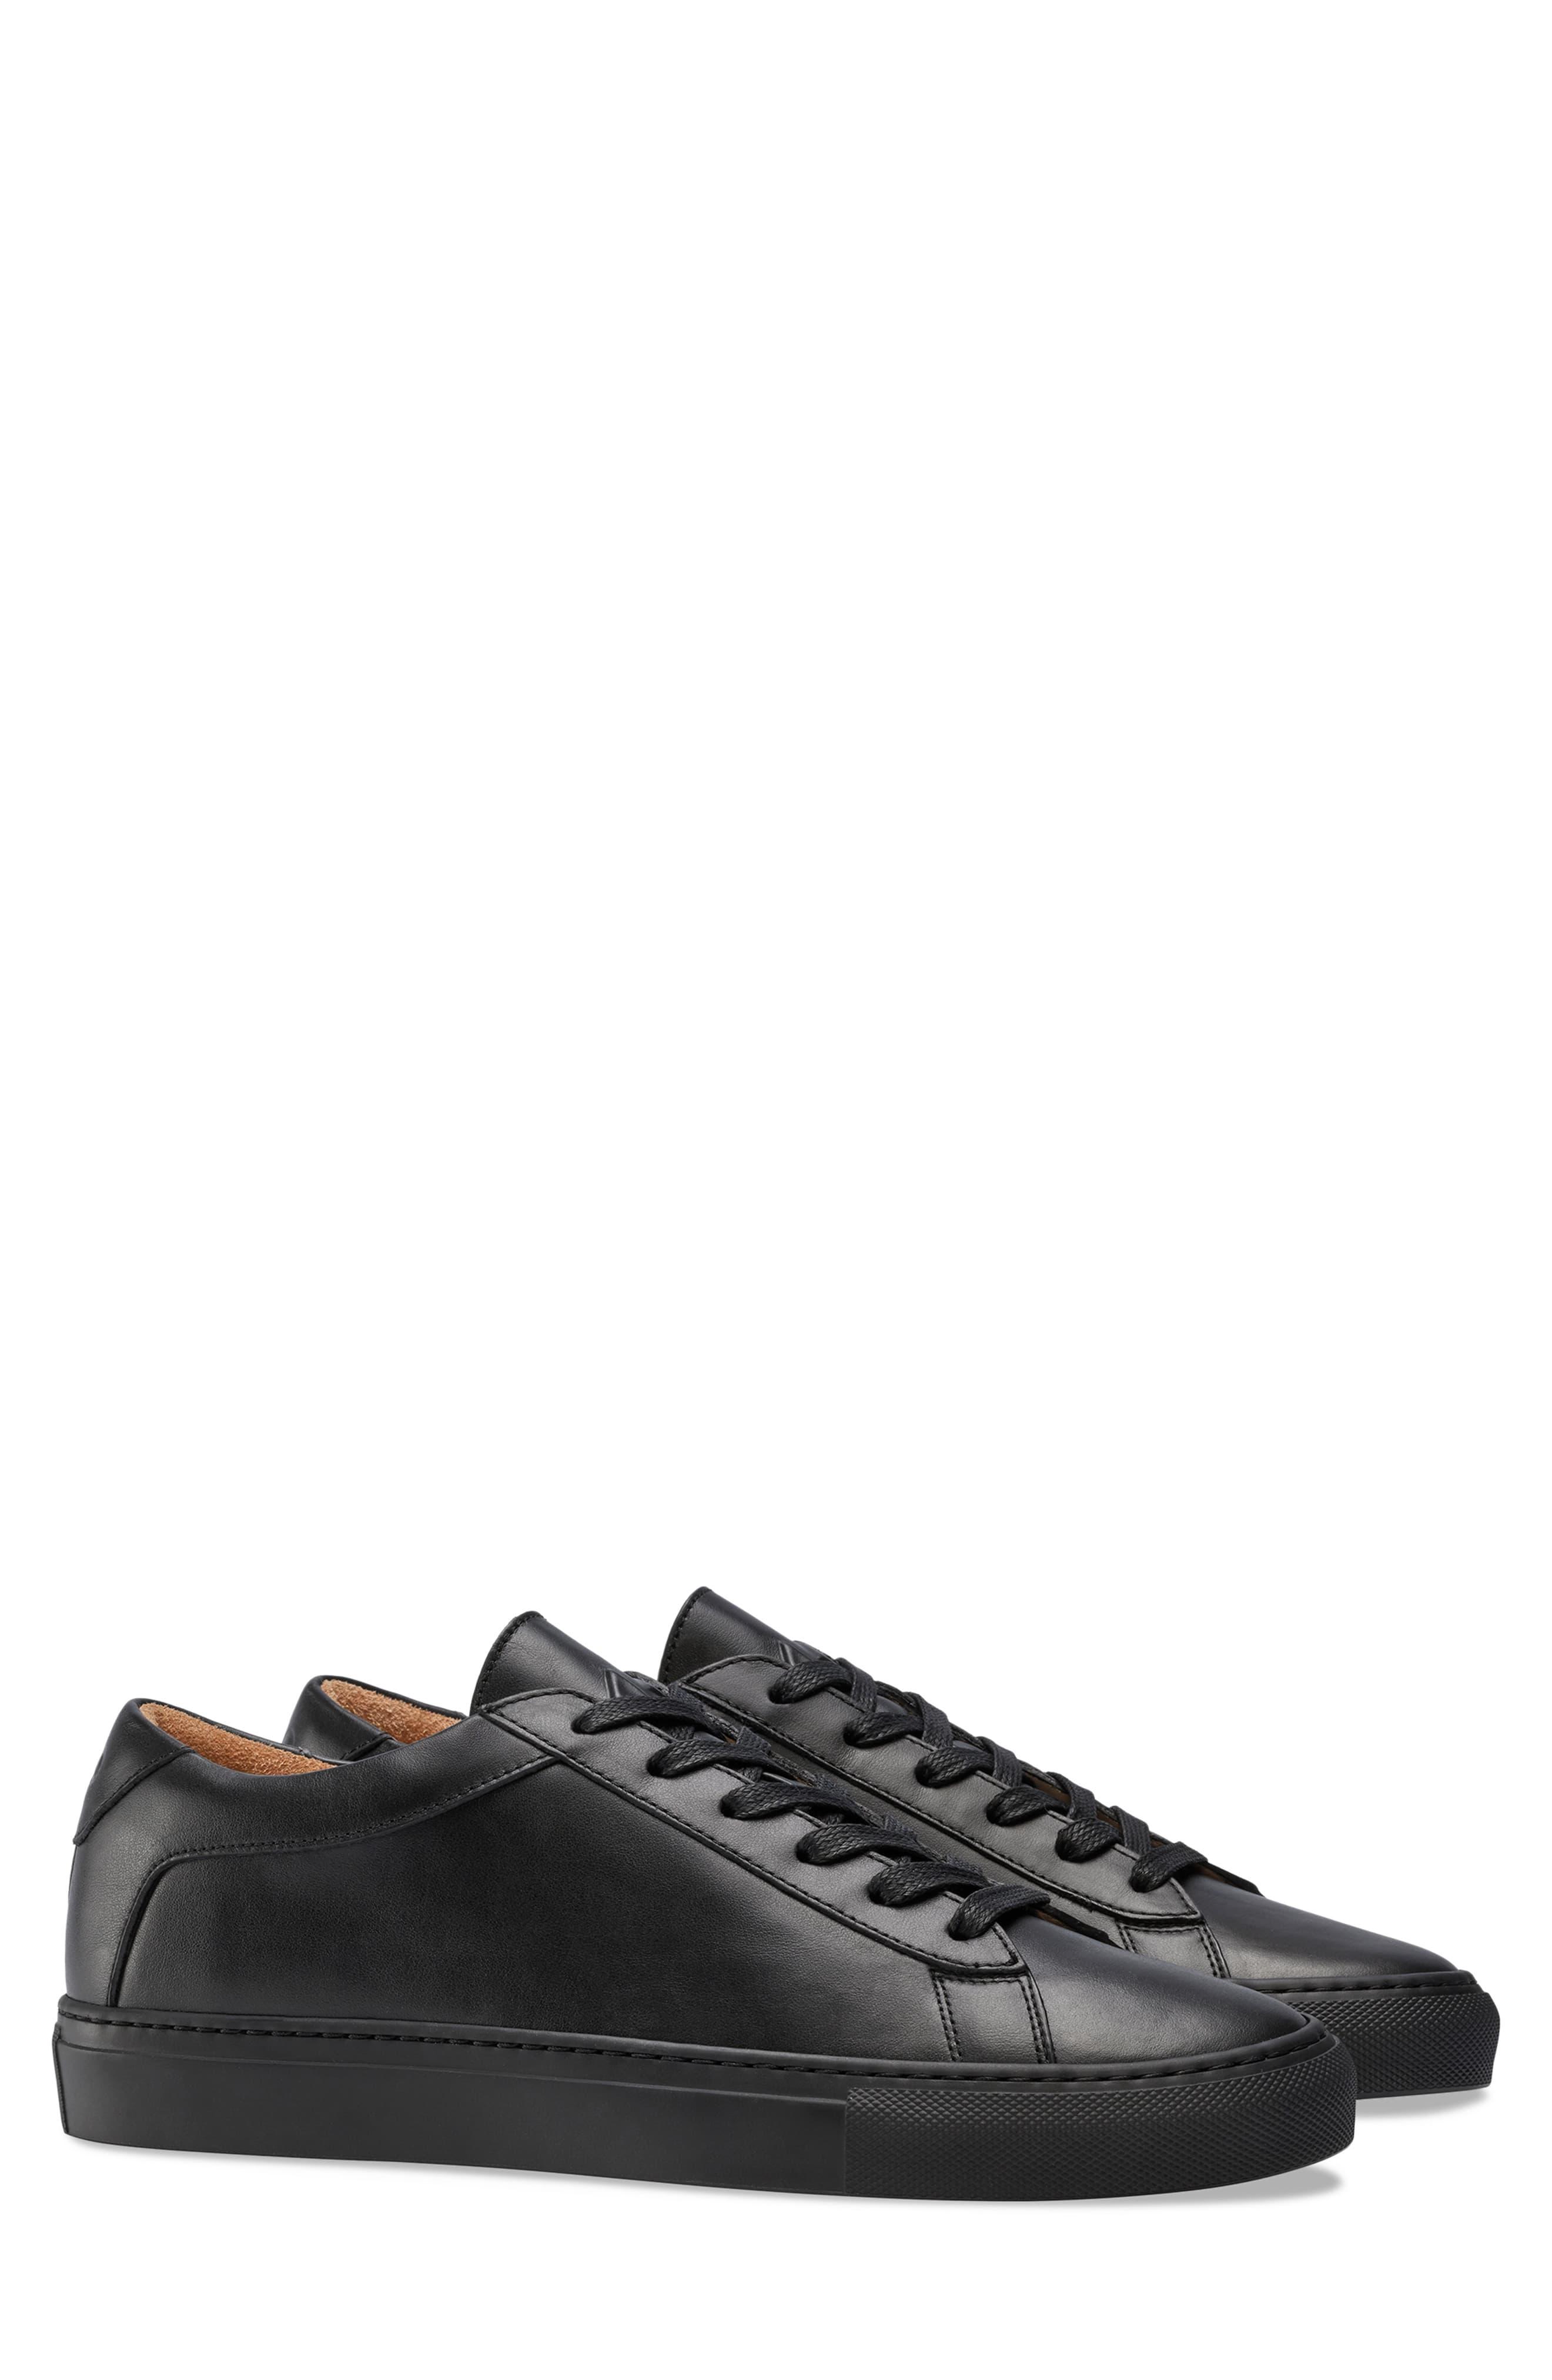 KOIO Capri Sneaker in Black for Men - Lyst